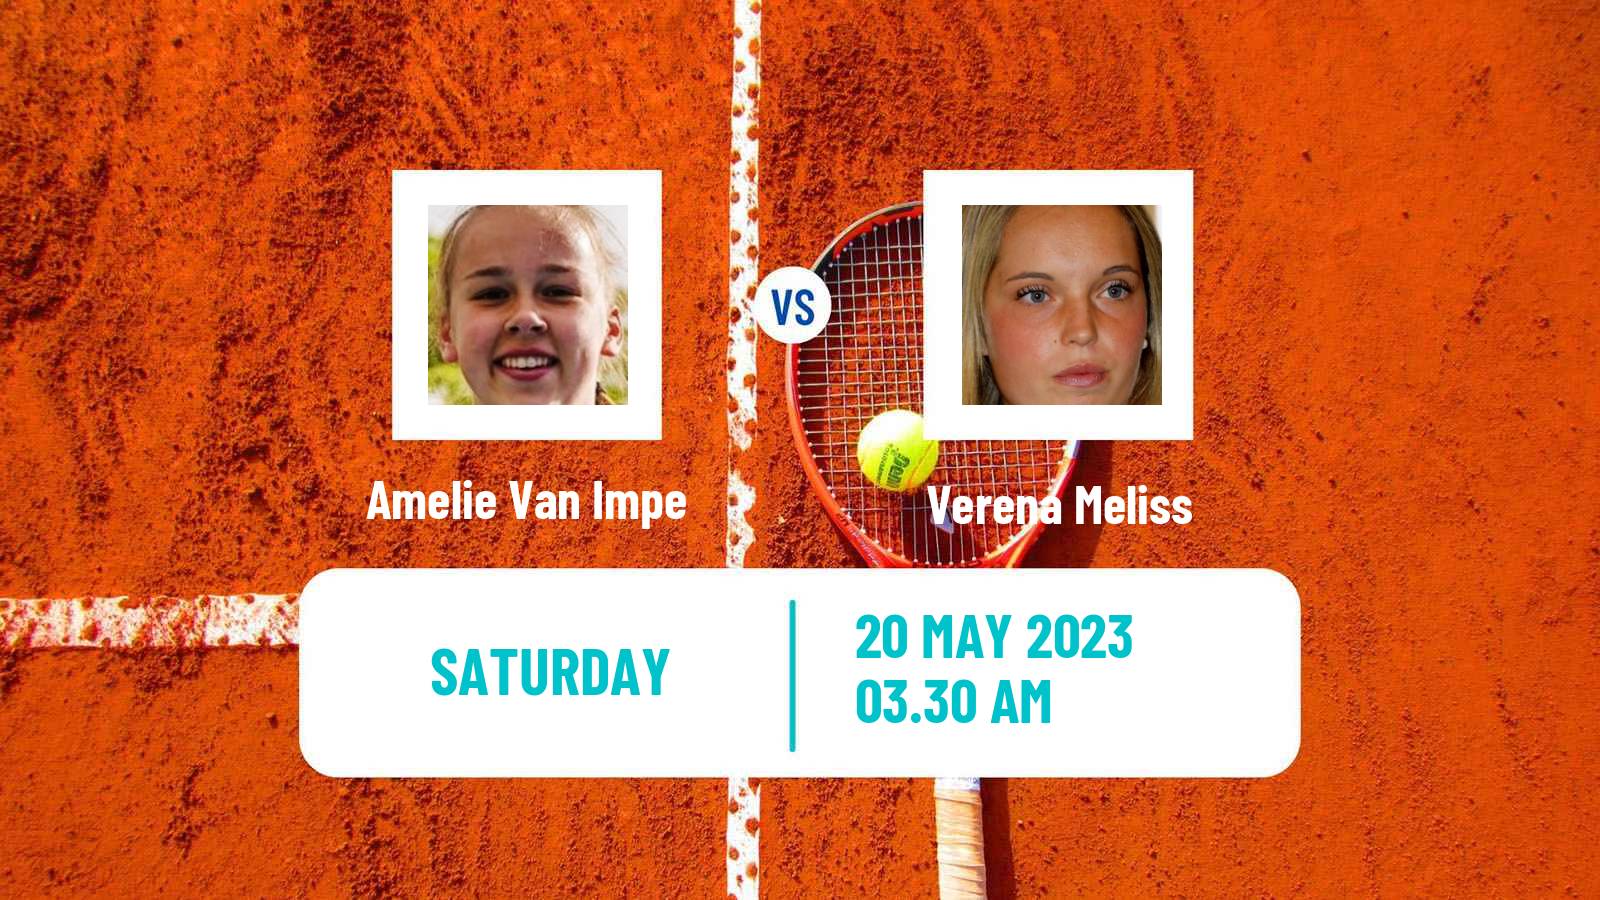 Tennis ITF W15 Antalya 16 Women Amelie Van Impe - Verena Meliss